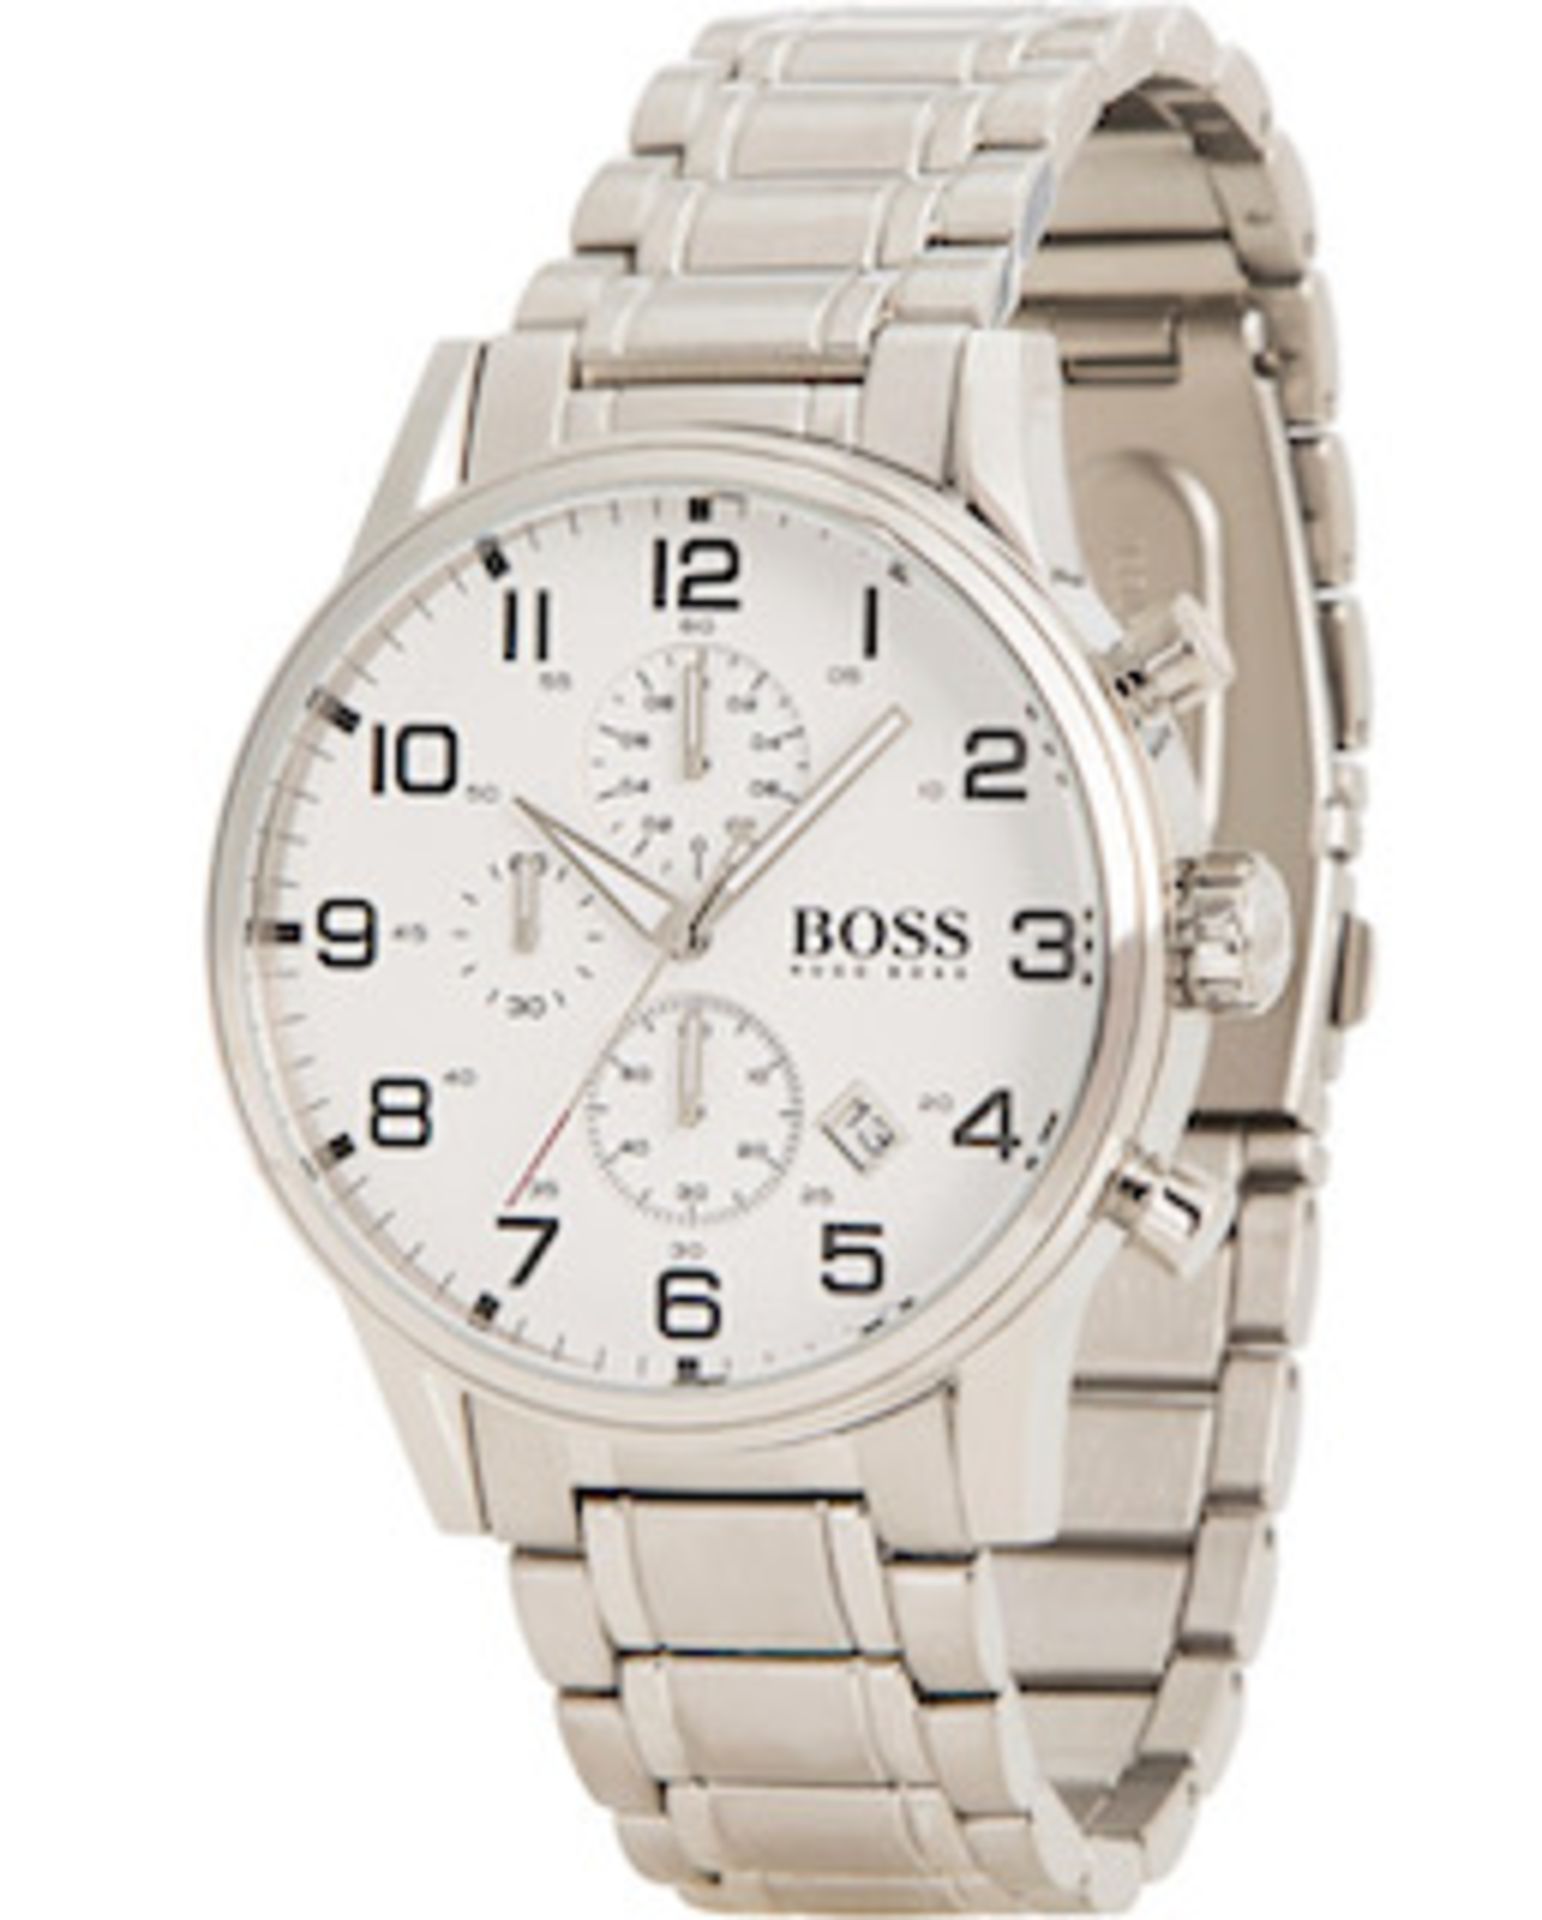 Hugo Boss Men's Aeroliner Silver Bracelet Chronograph Watch 1513182 Authentic Men's Classic - Image 7 of 7